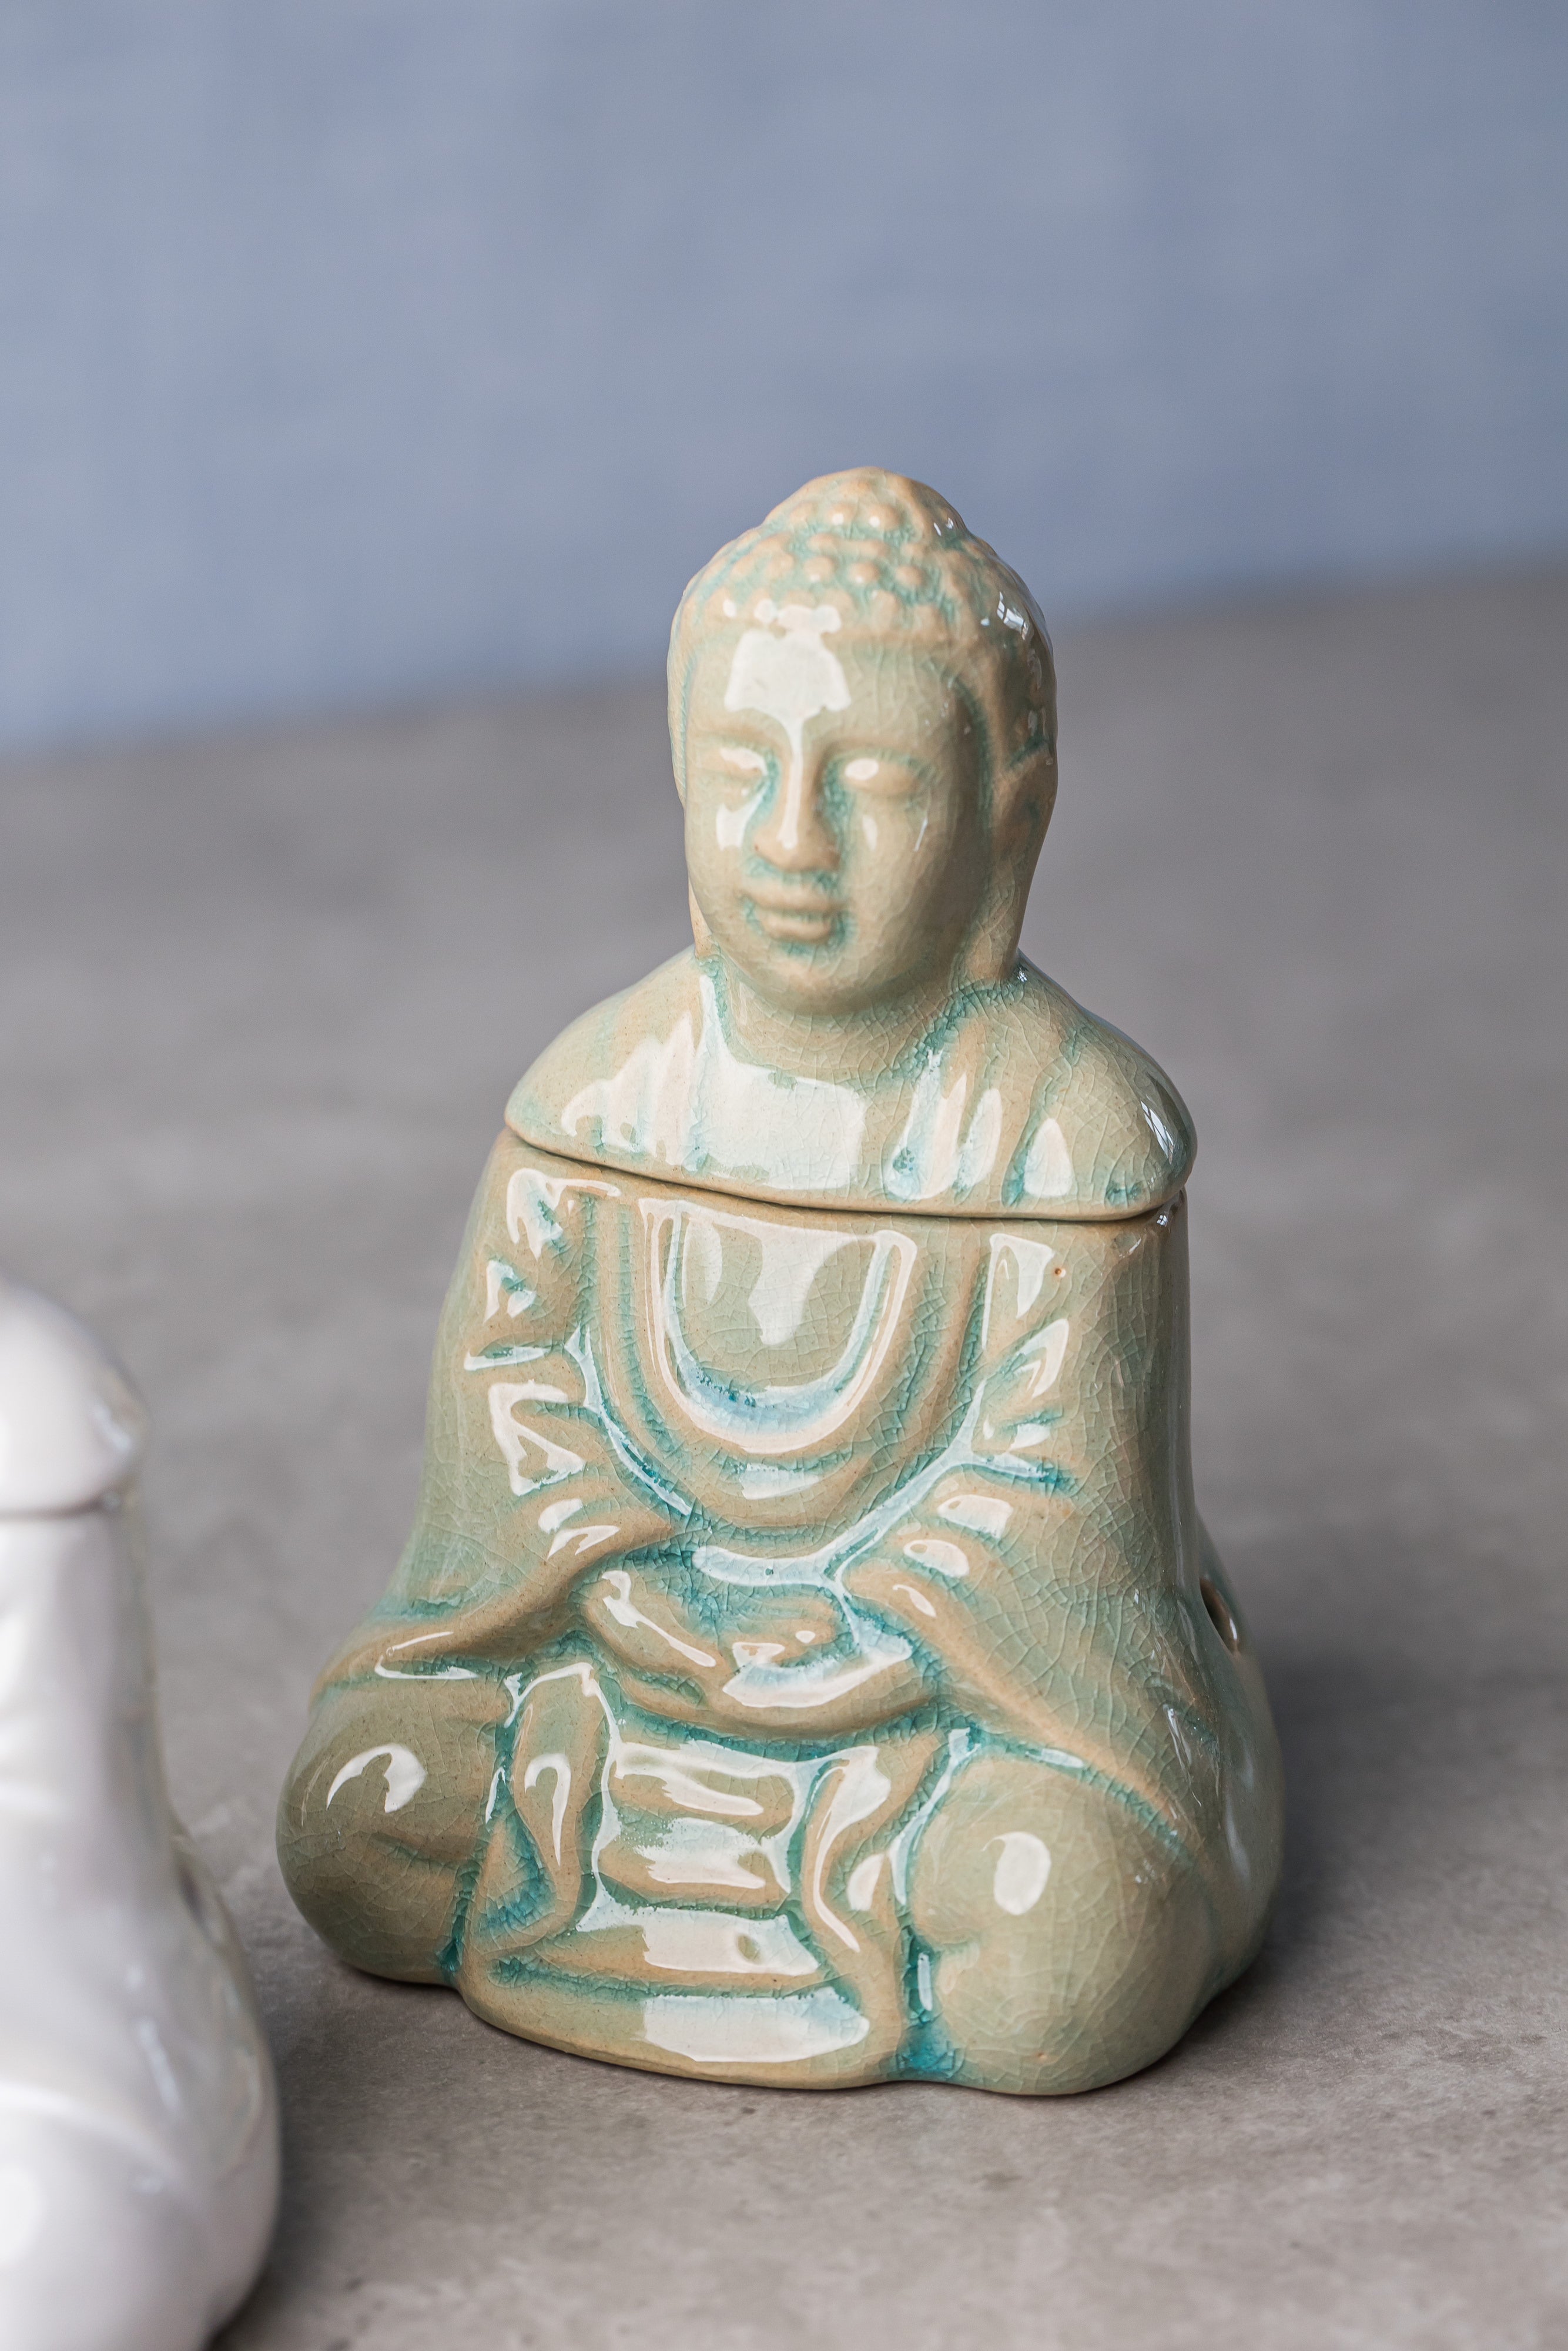 Sitting Buddha Aromatherapy Oil Burner - Mindfulness Enhancer for Relaxation, Meditation &amp; Holistic Healing - Everyday Rocks